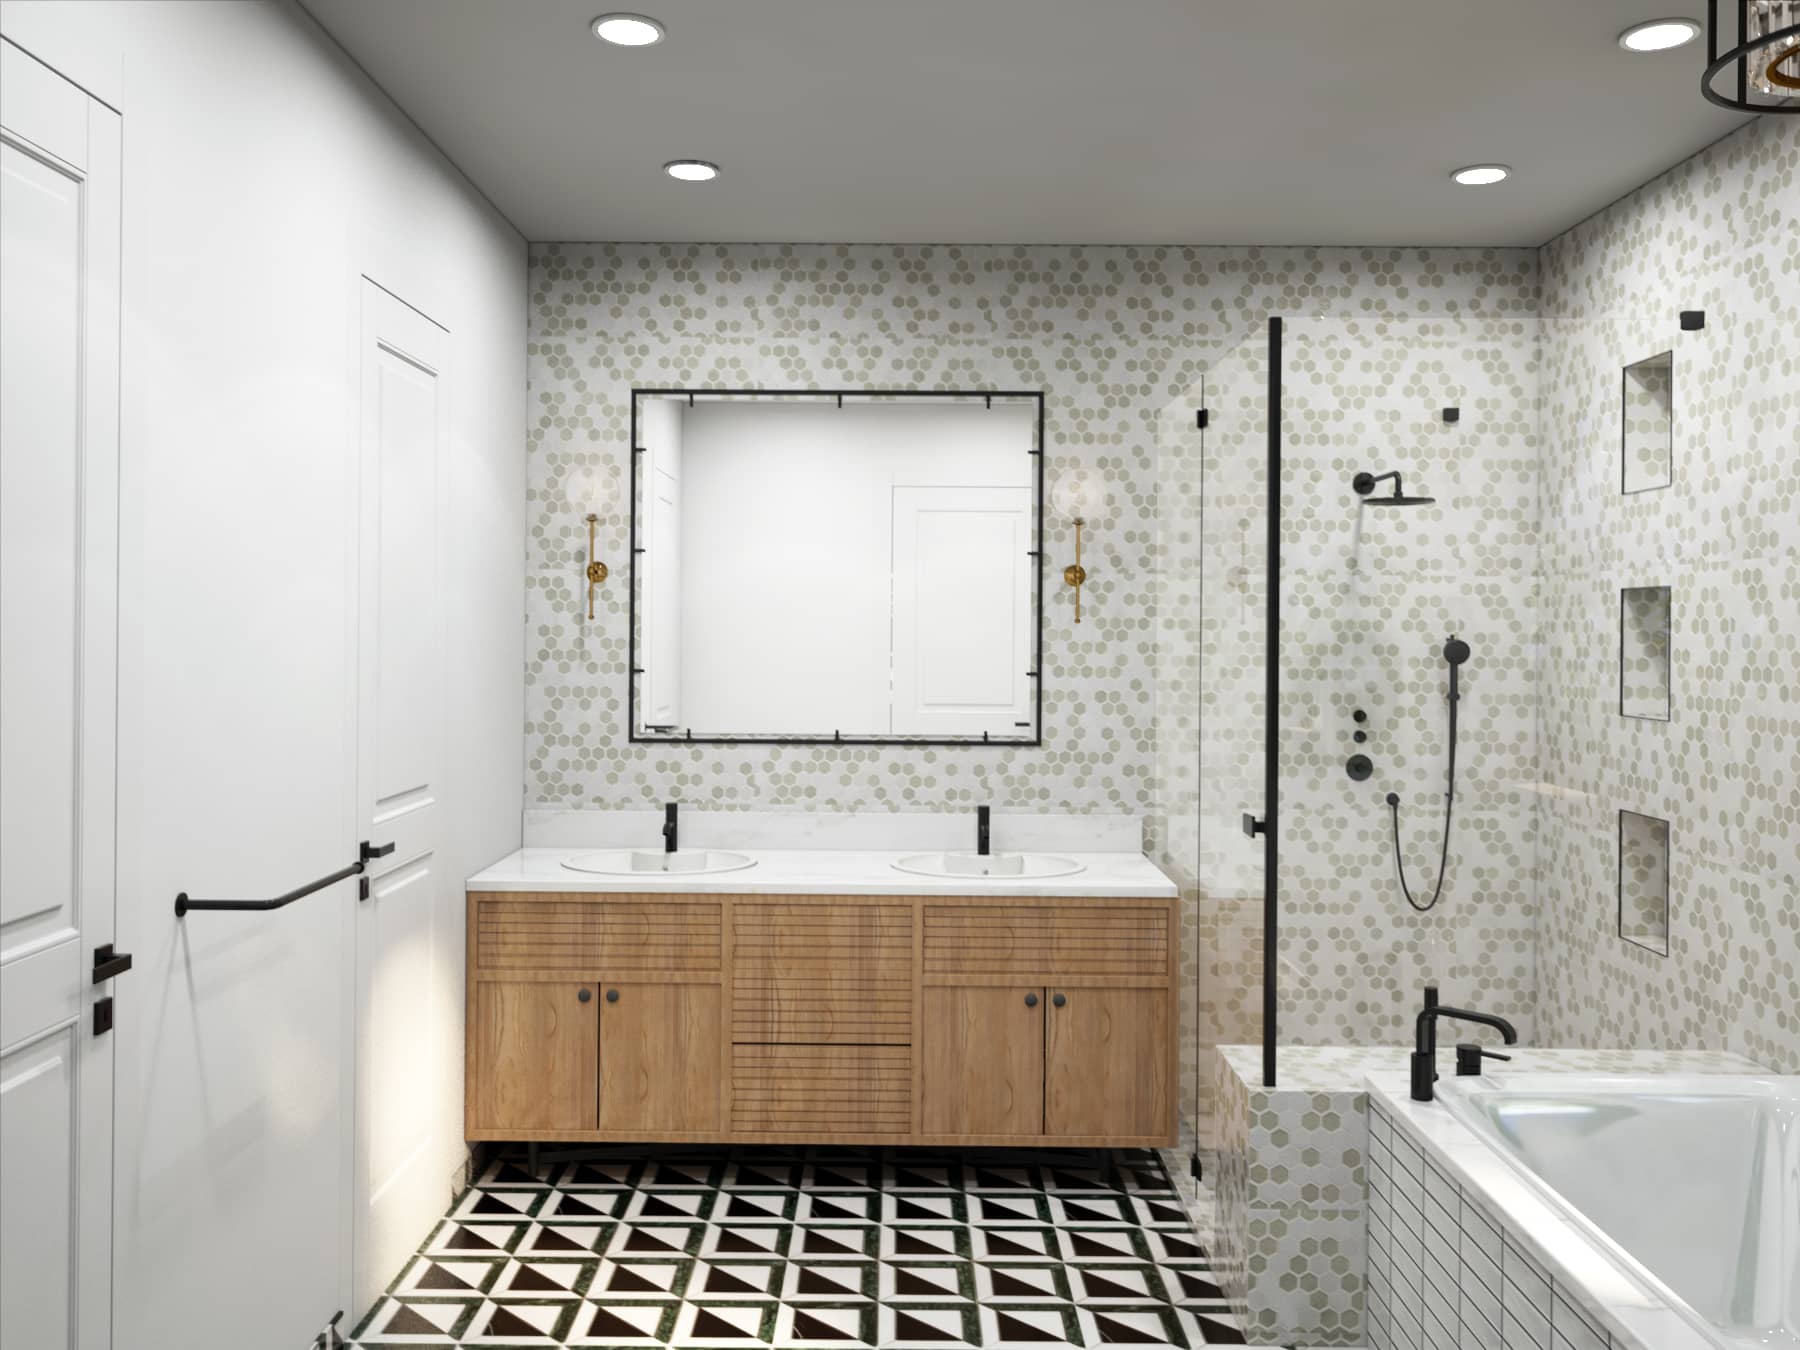 Kitchen & Bath Interior Design Services in San Francisco